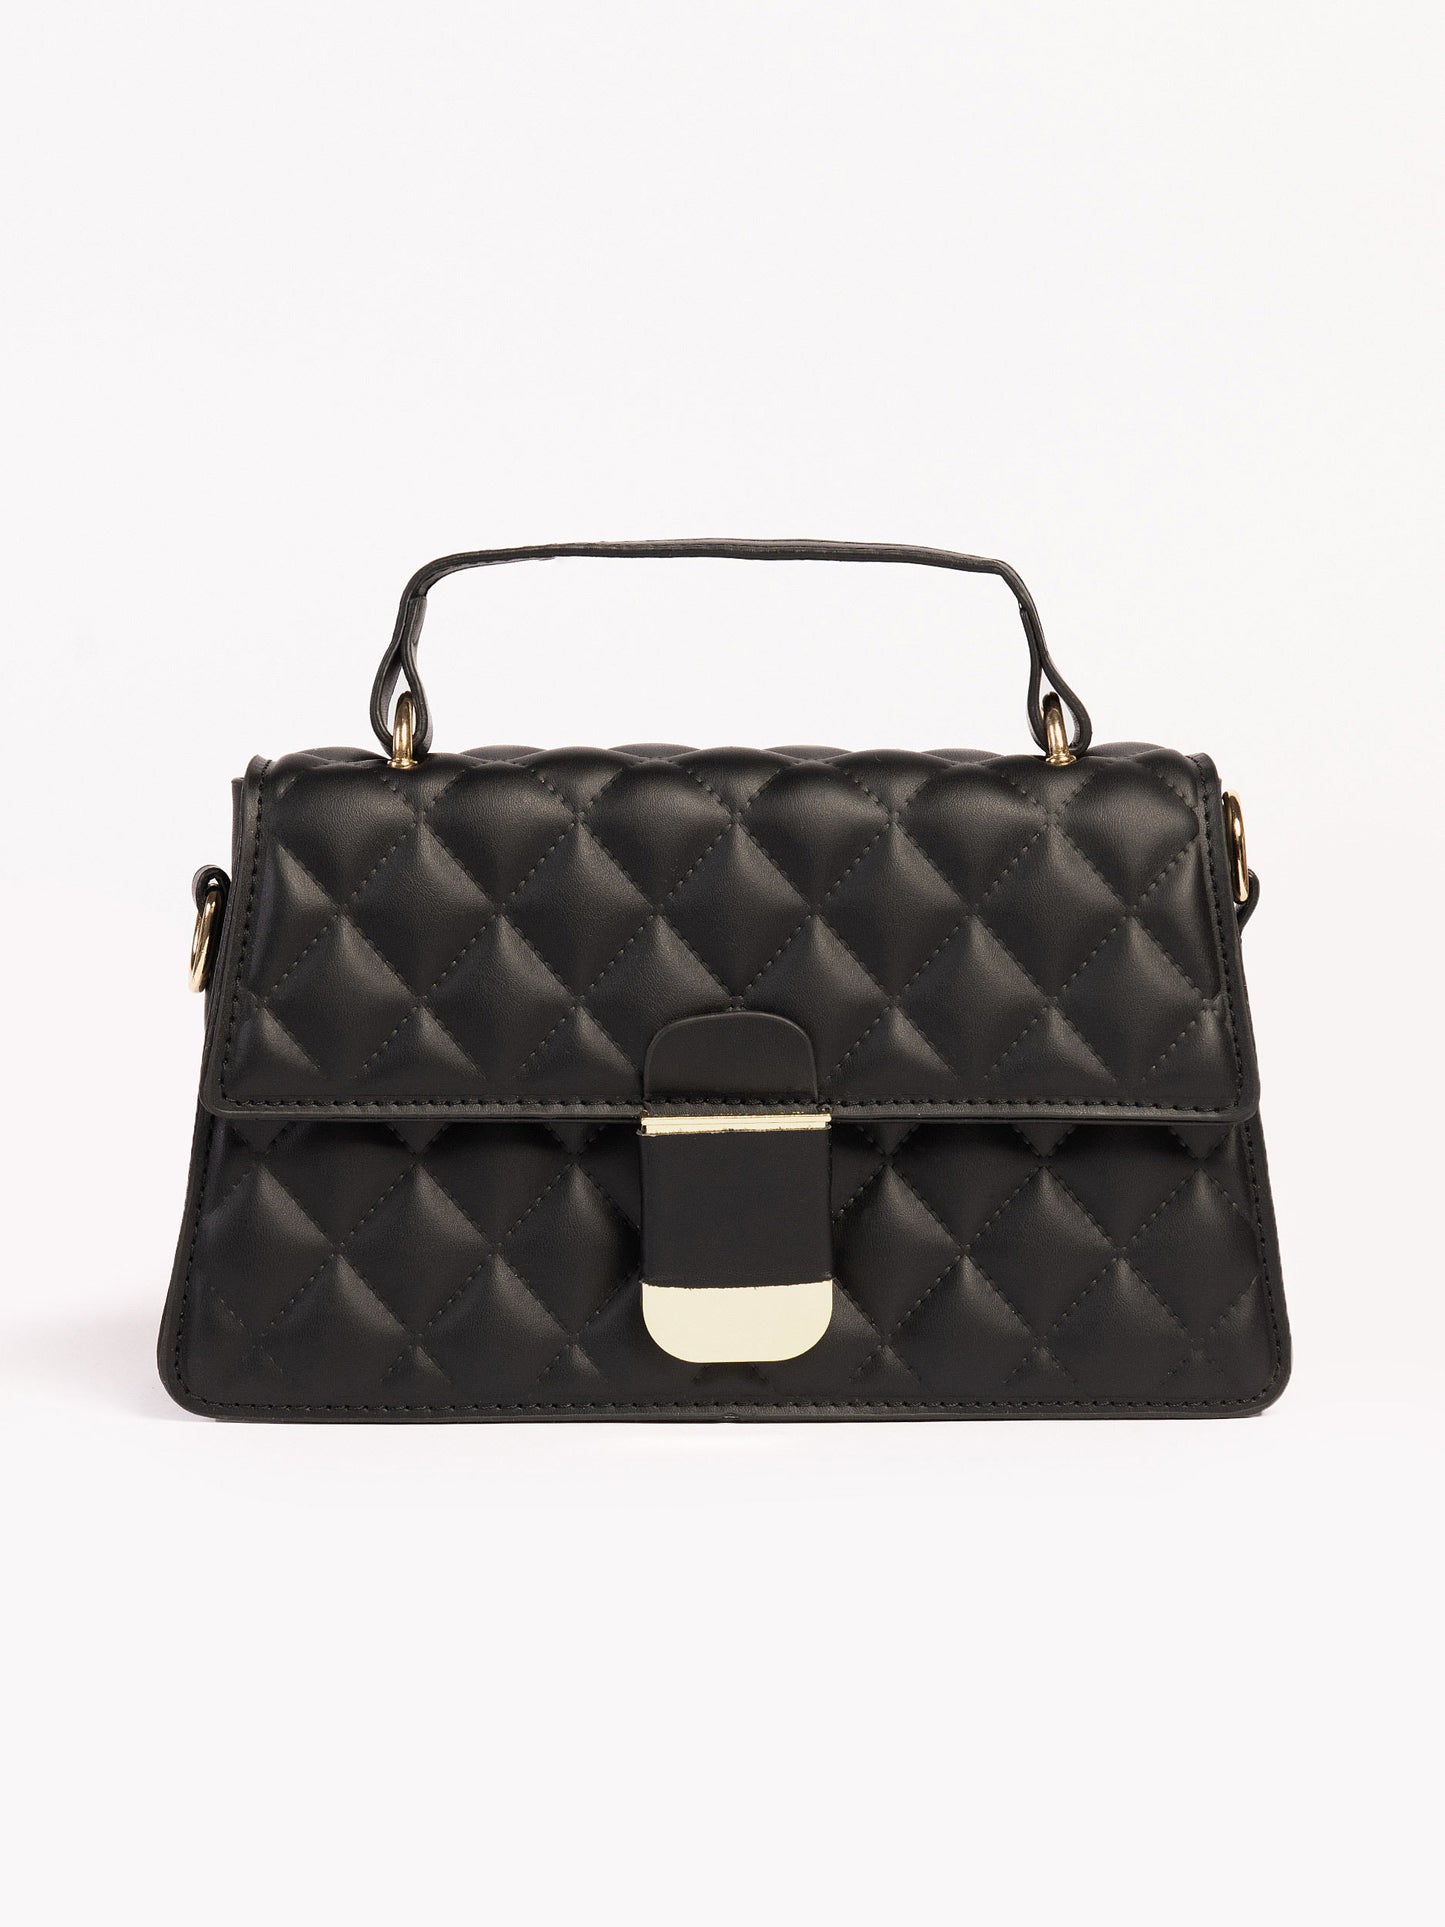 Criss-Cross Box Style Handbag